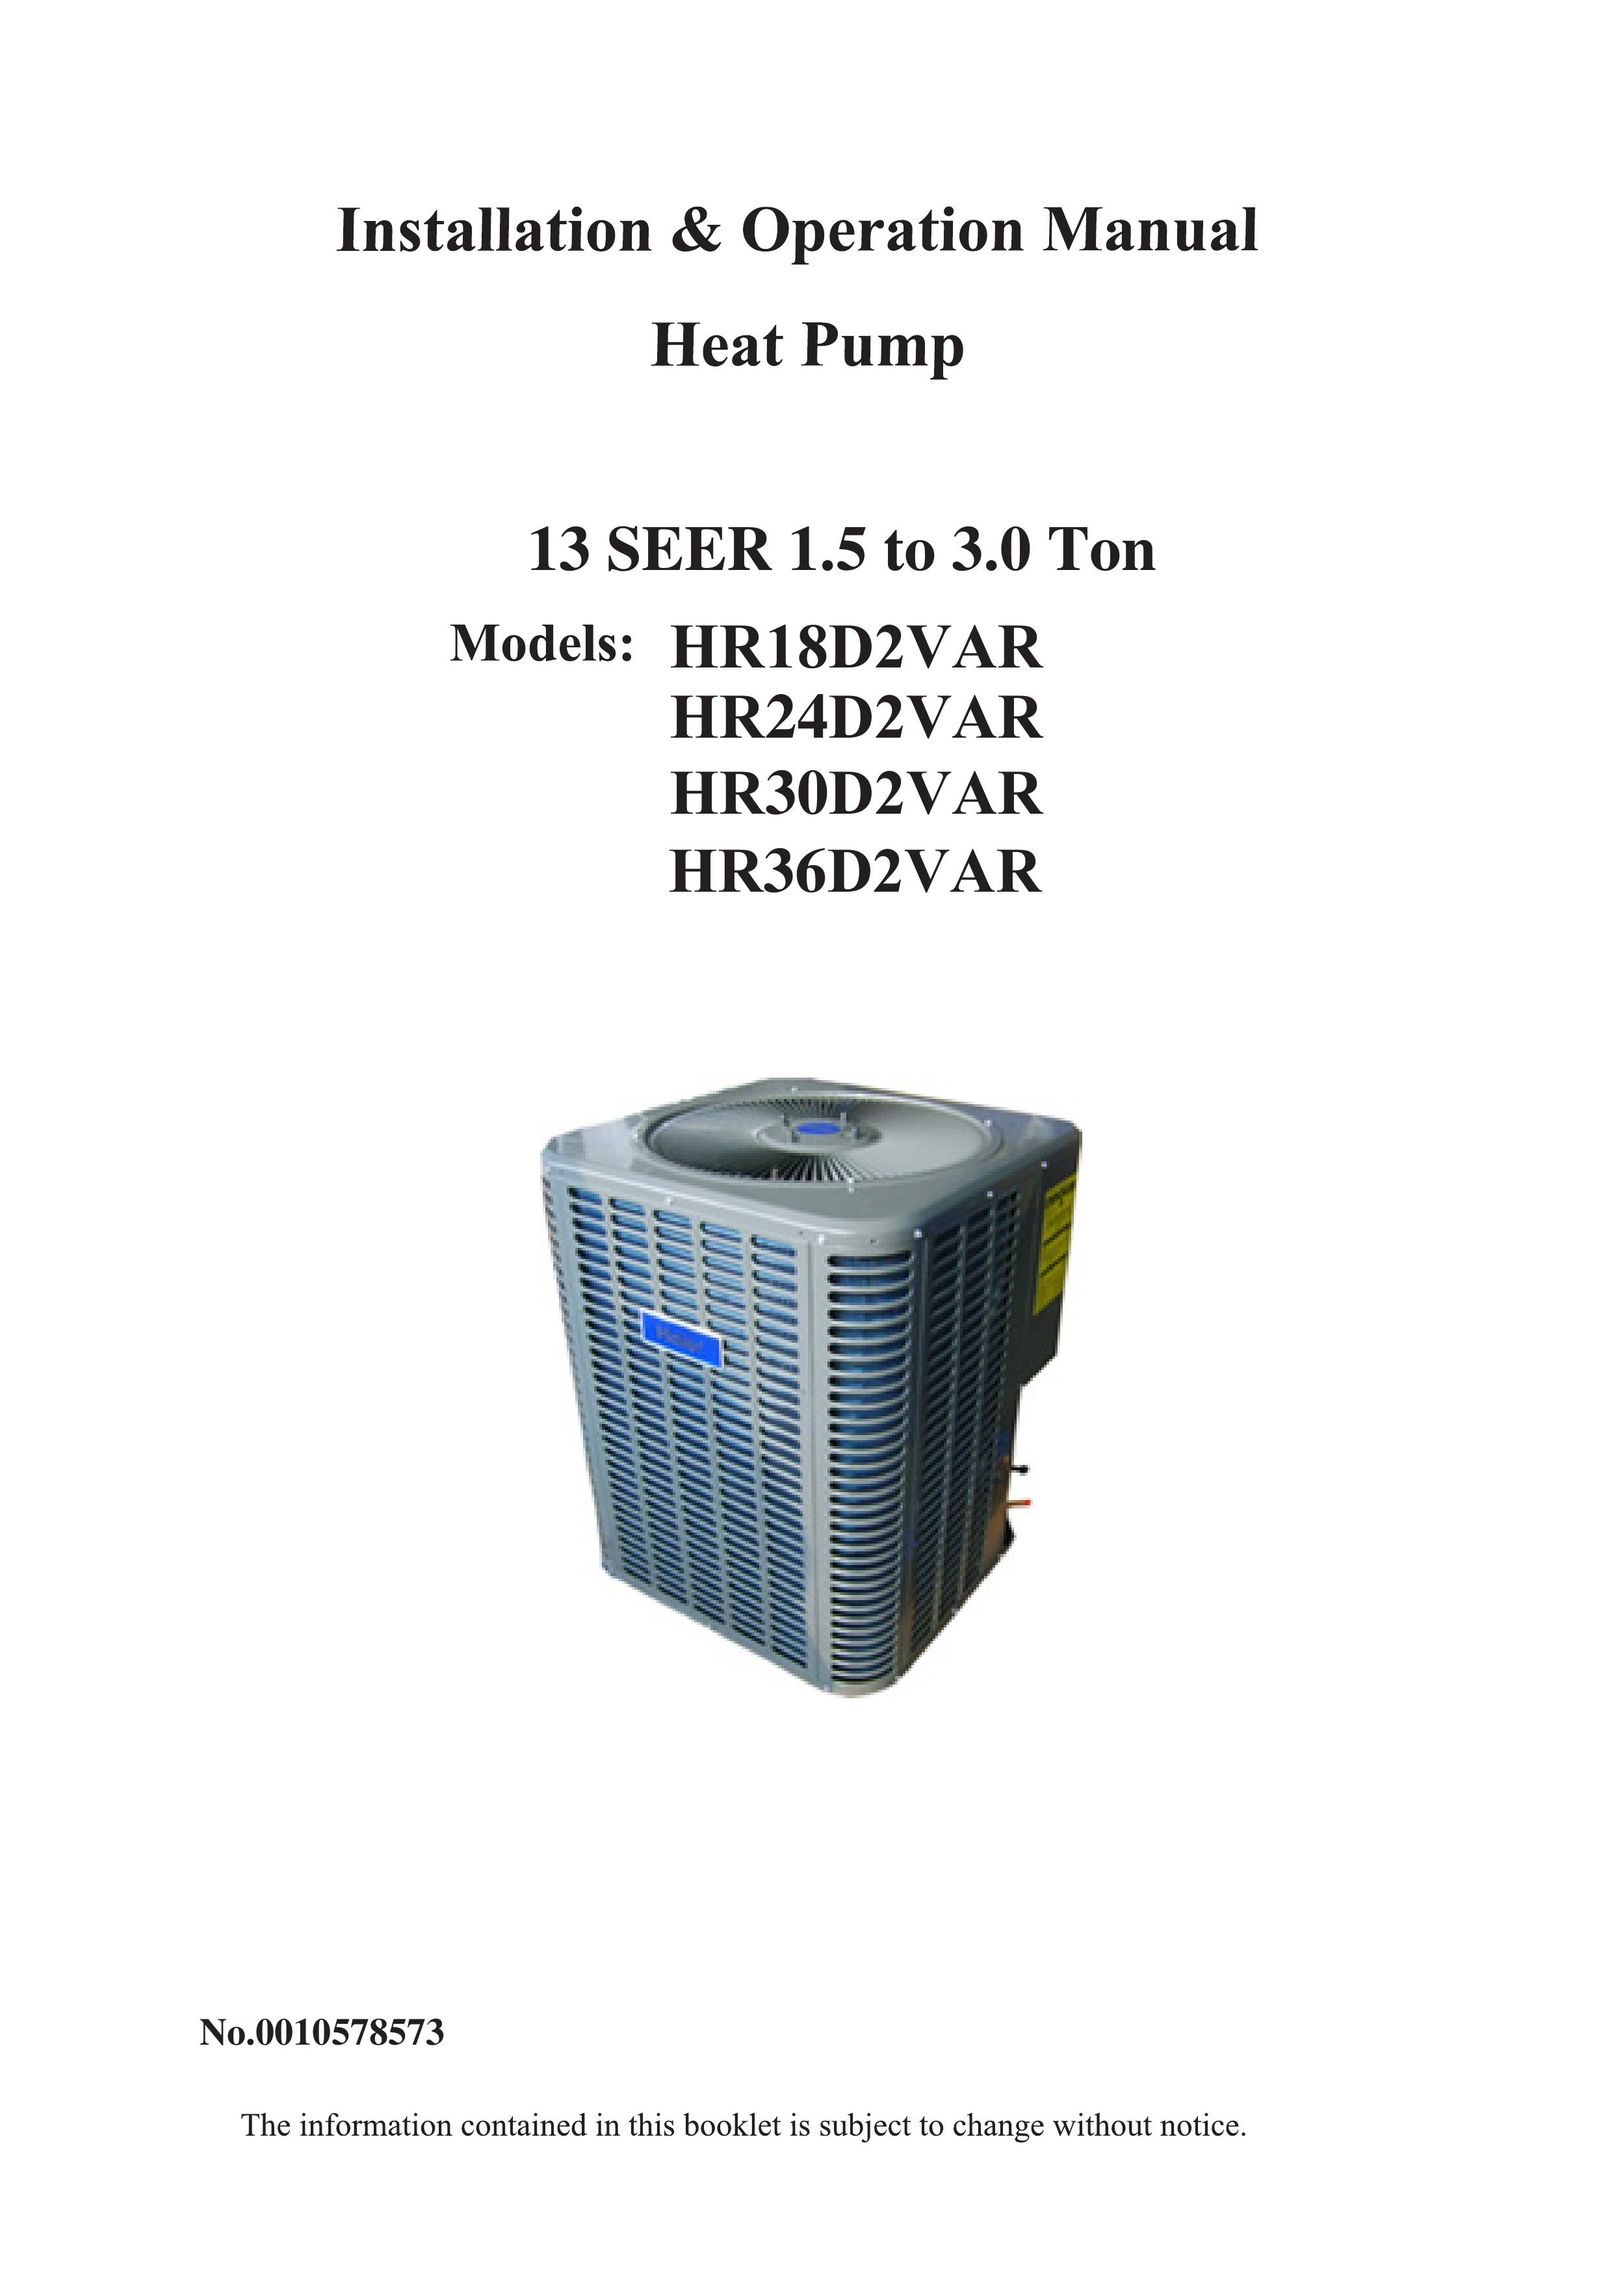 Haier HR18D2VAR Heat Pump User Manual